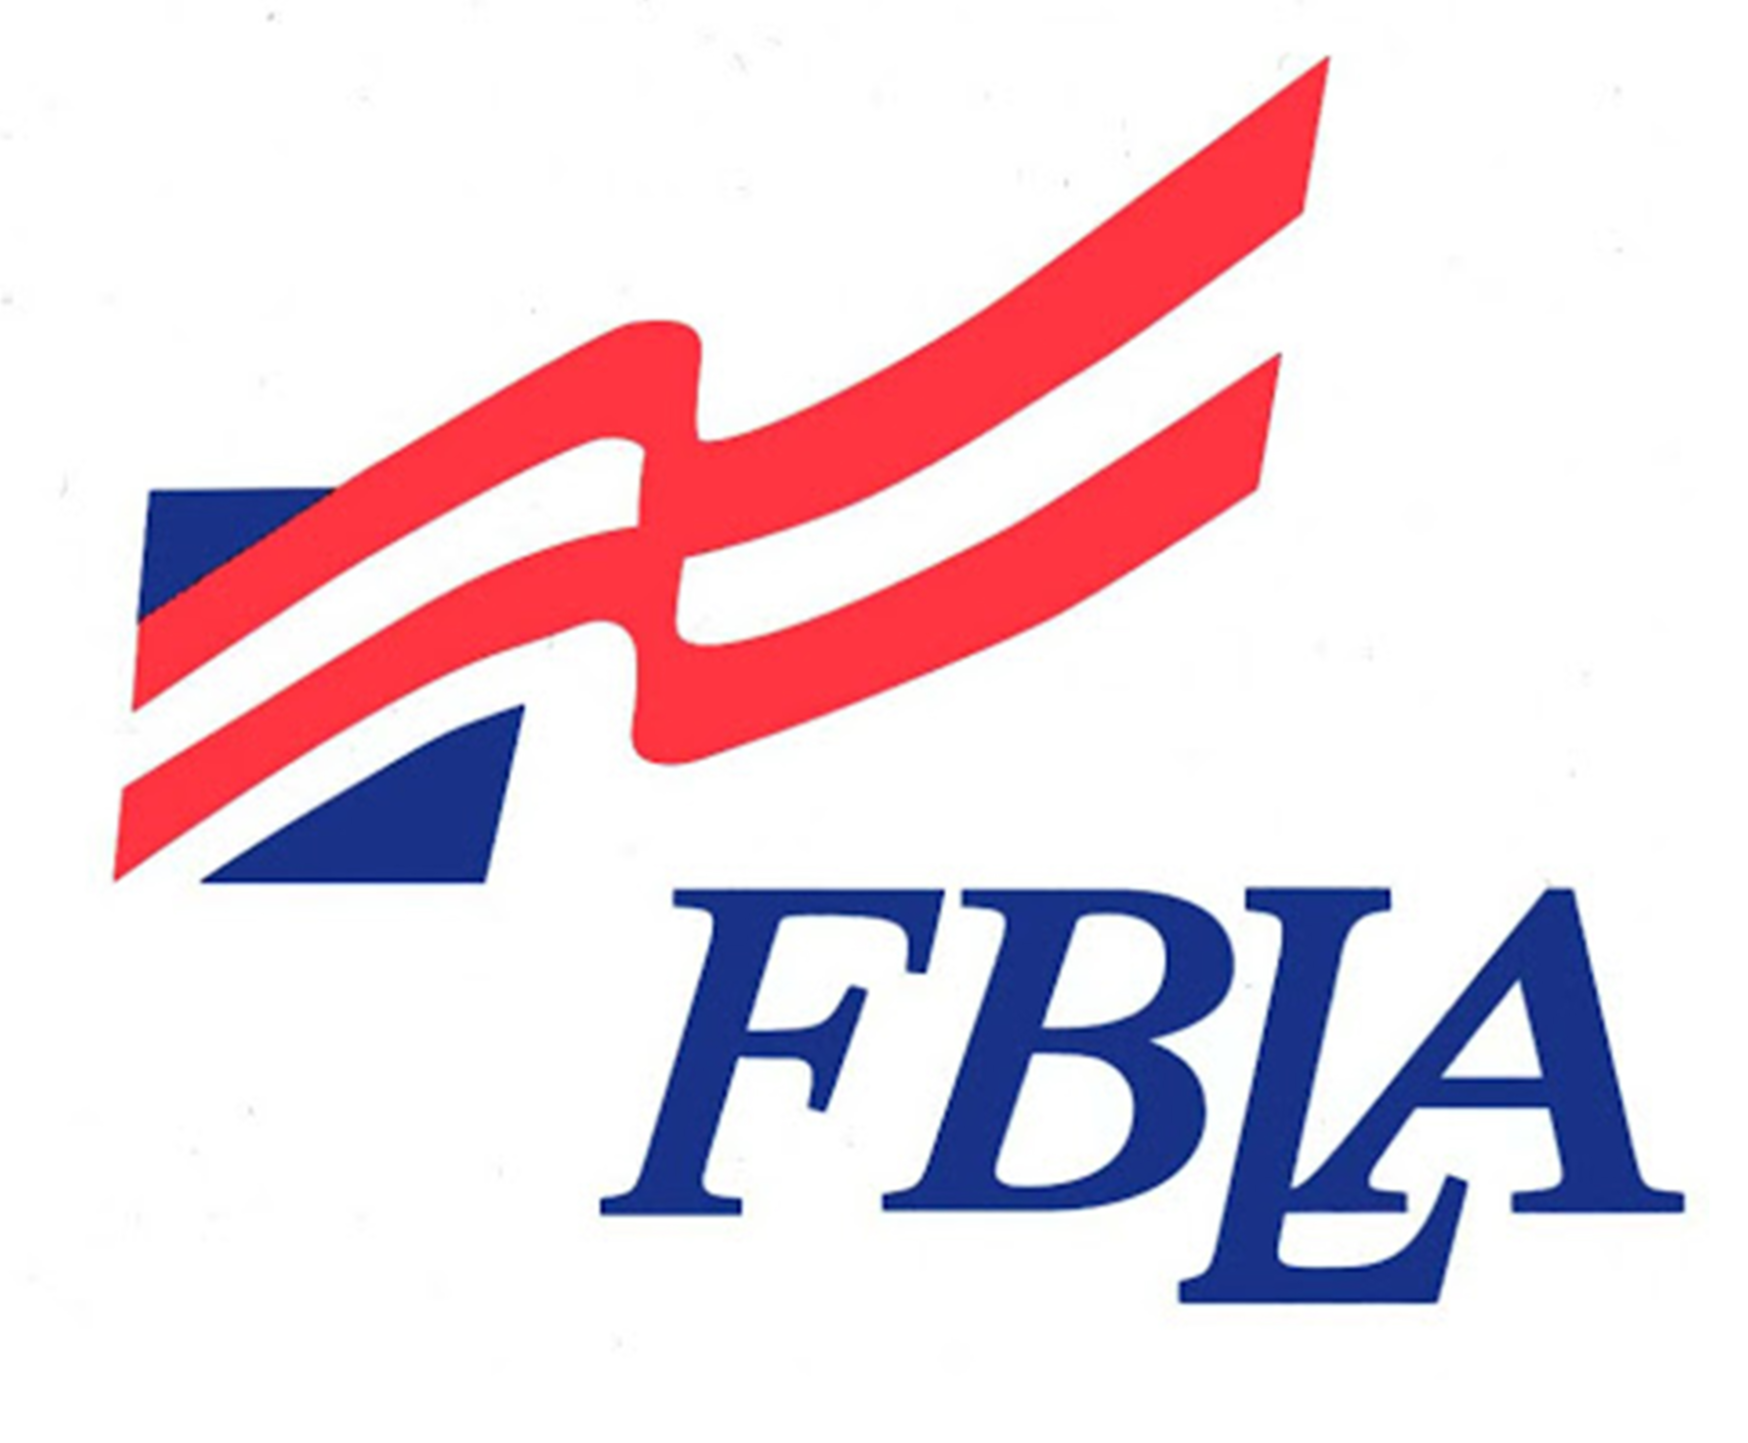 FBLA Emblem